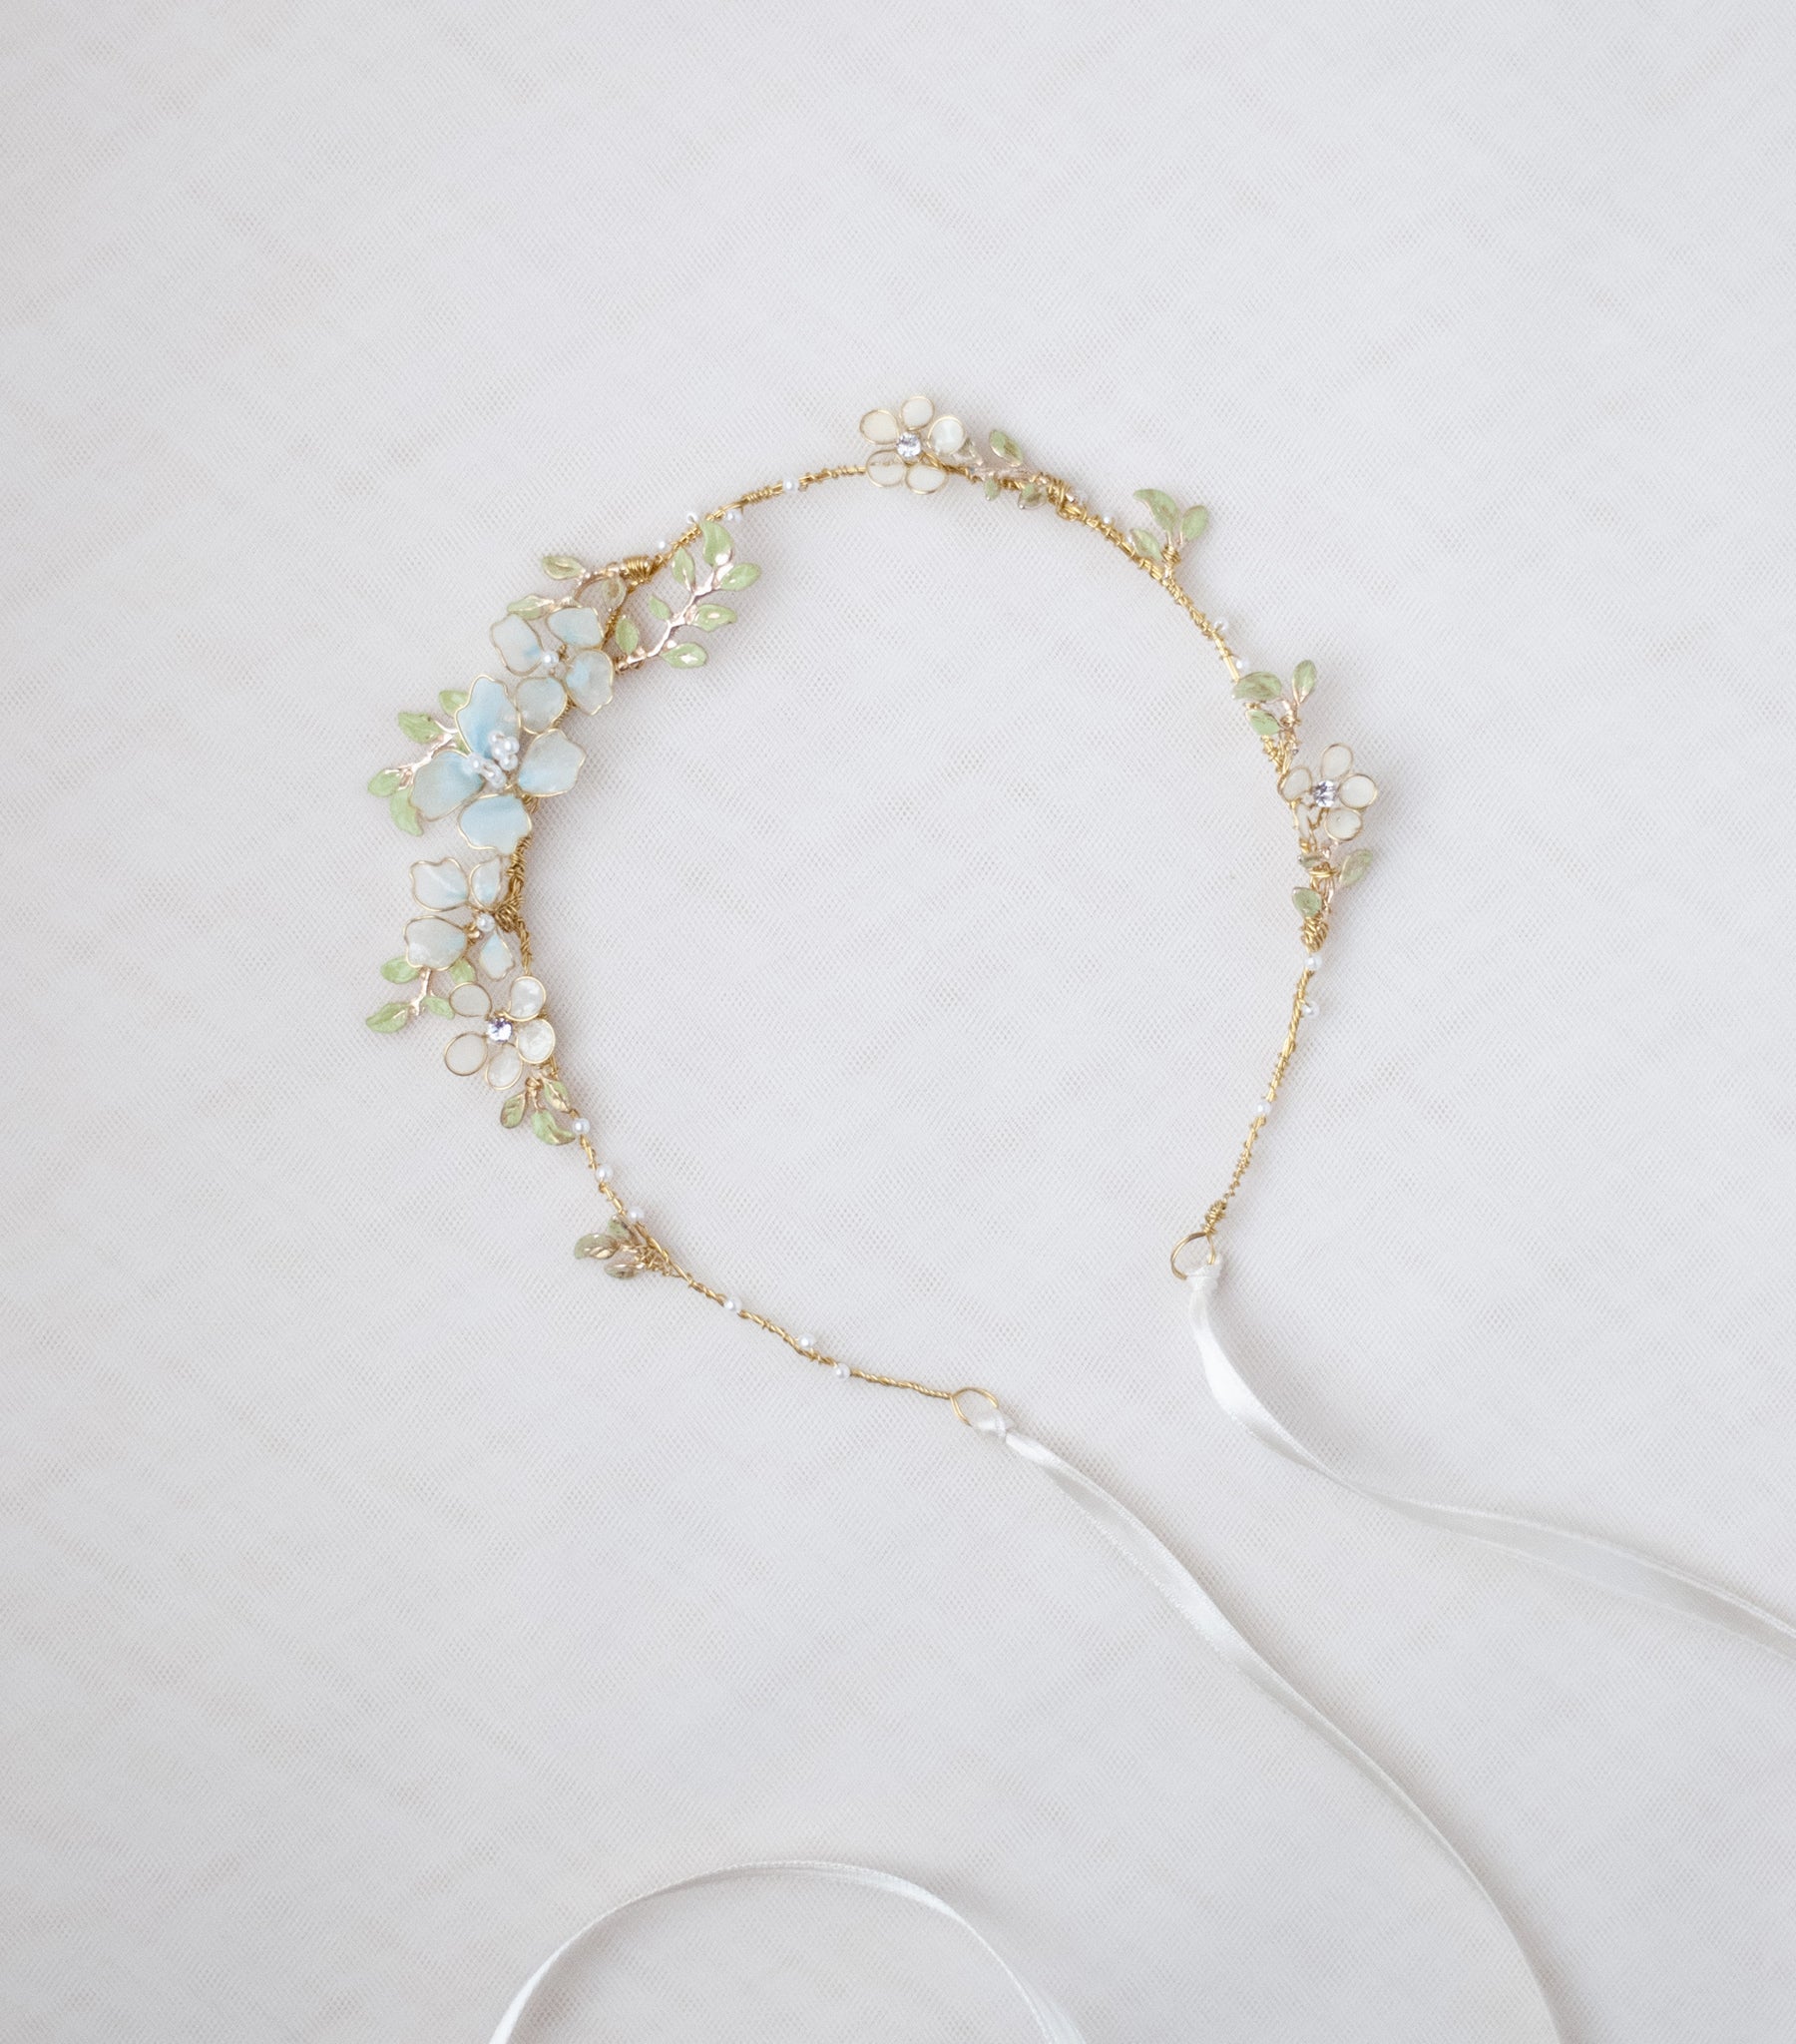 Linen flower crown